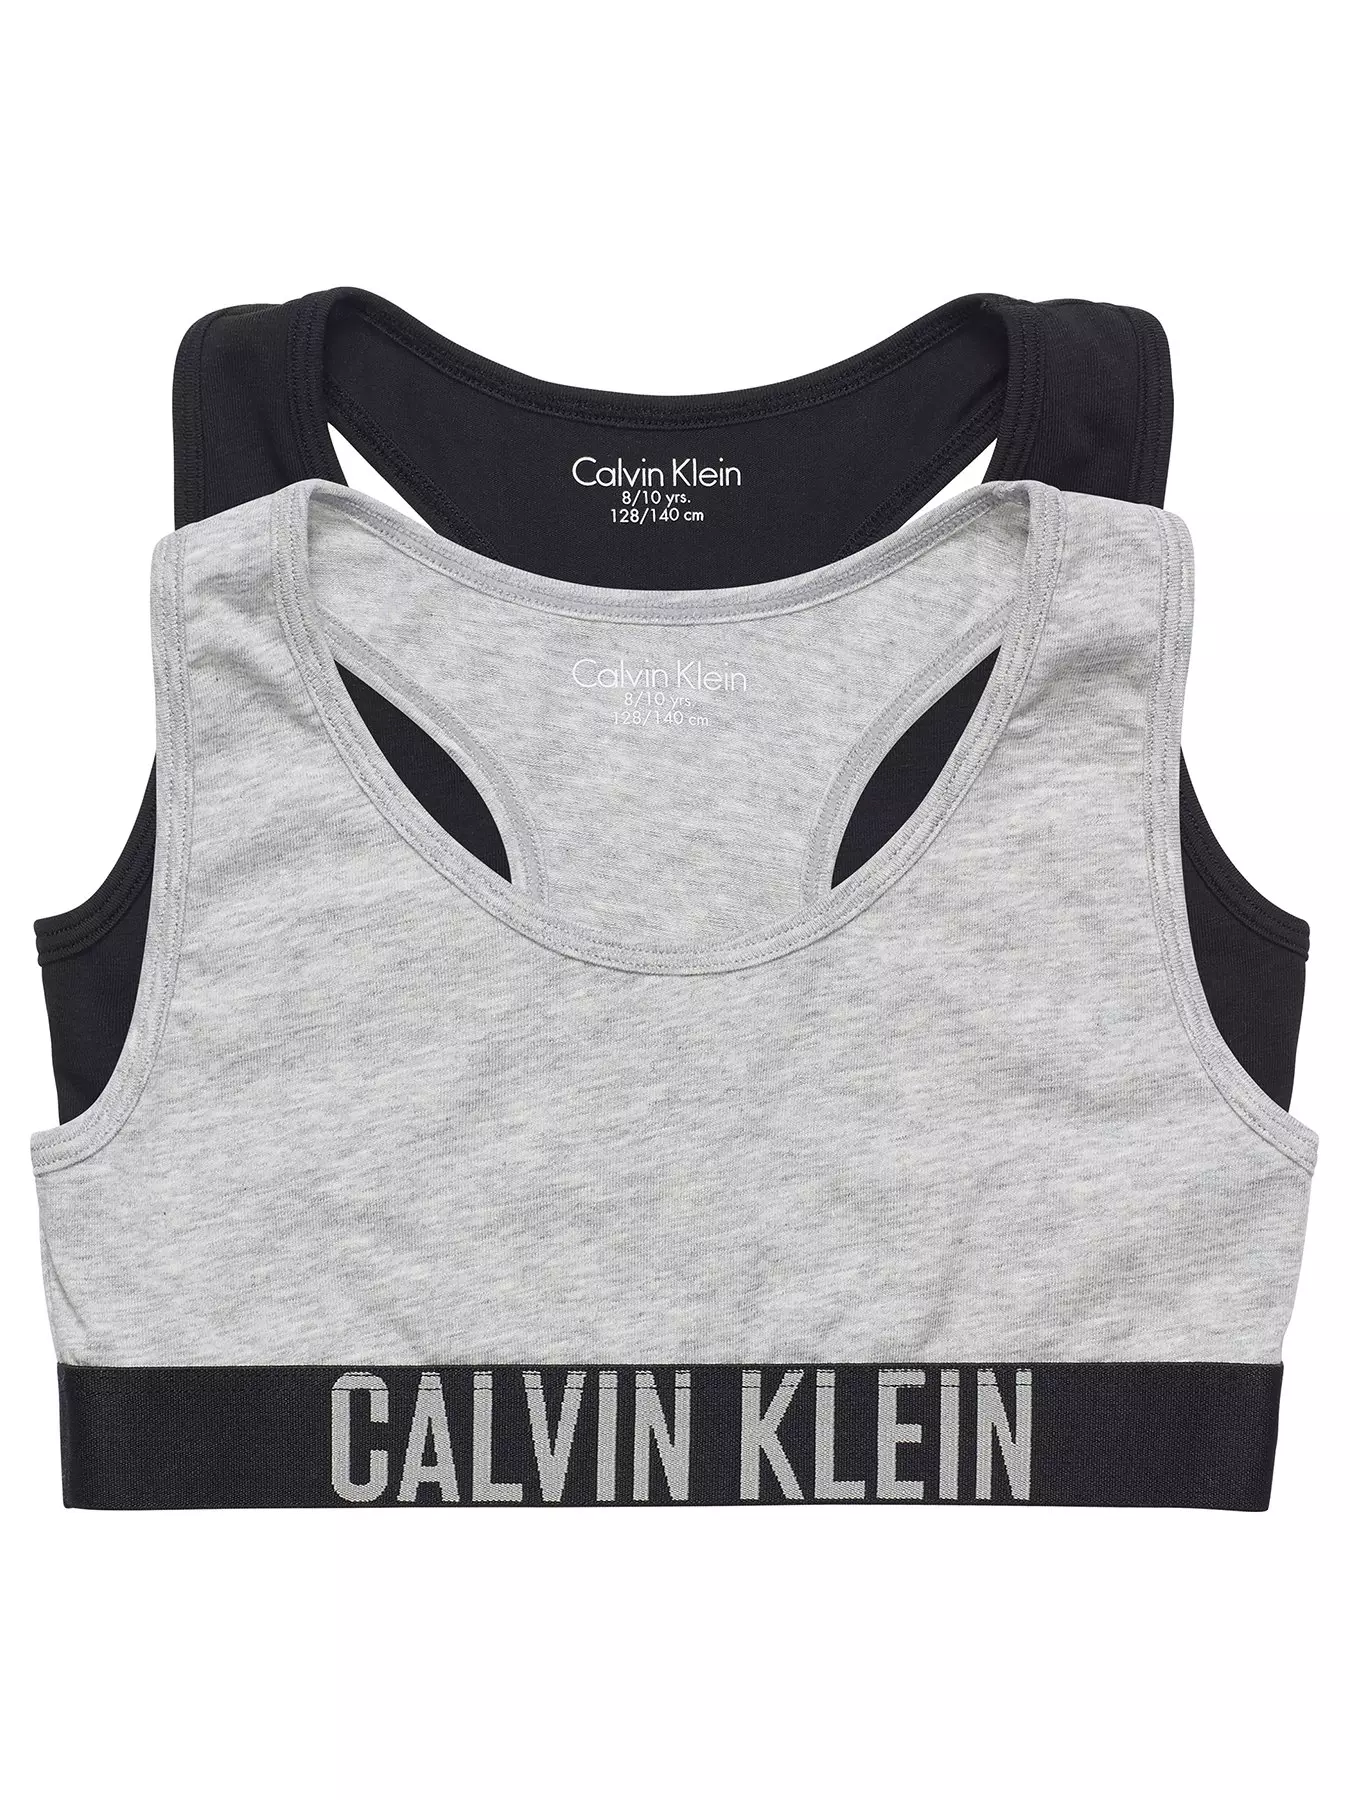 Calvin Klein Grey Sports Bra Plain 2 Pack Girlsclothing